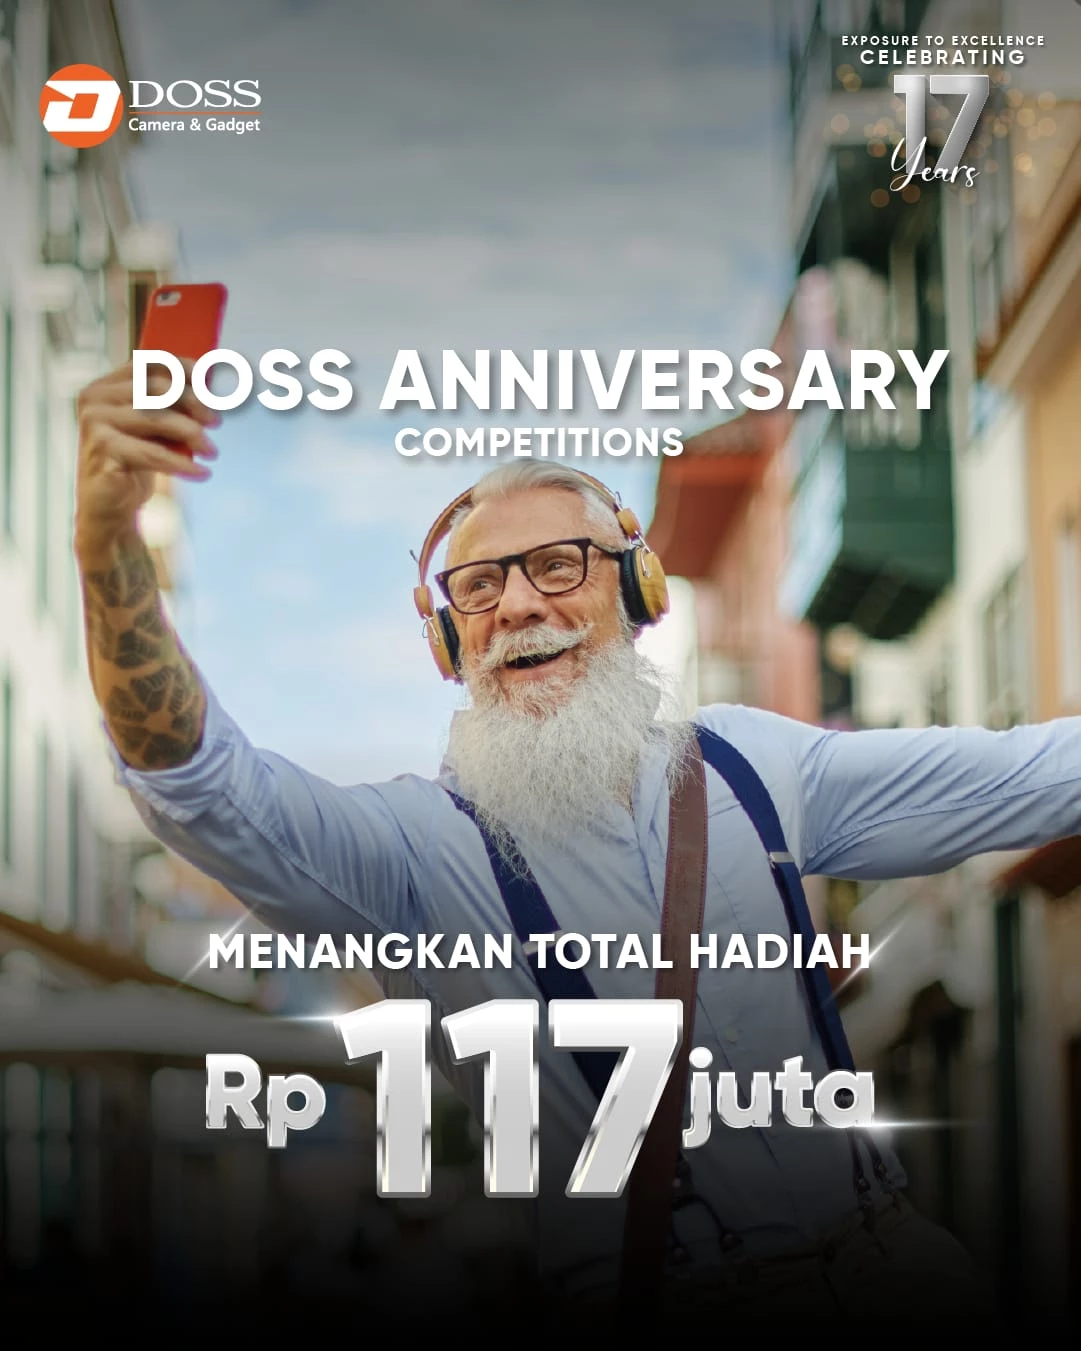 Hai Sahabat DOSS, Dalam rangka memperingati Anniversary DOSS yang ke 17 serta pembukaan cabang terbaru DOSS di kota Surabaya, kita mau mengadakan lomba-lomba menarik yang bisa kamu ikuti dengan hadiah total puluhan Juta Rupiah nih.